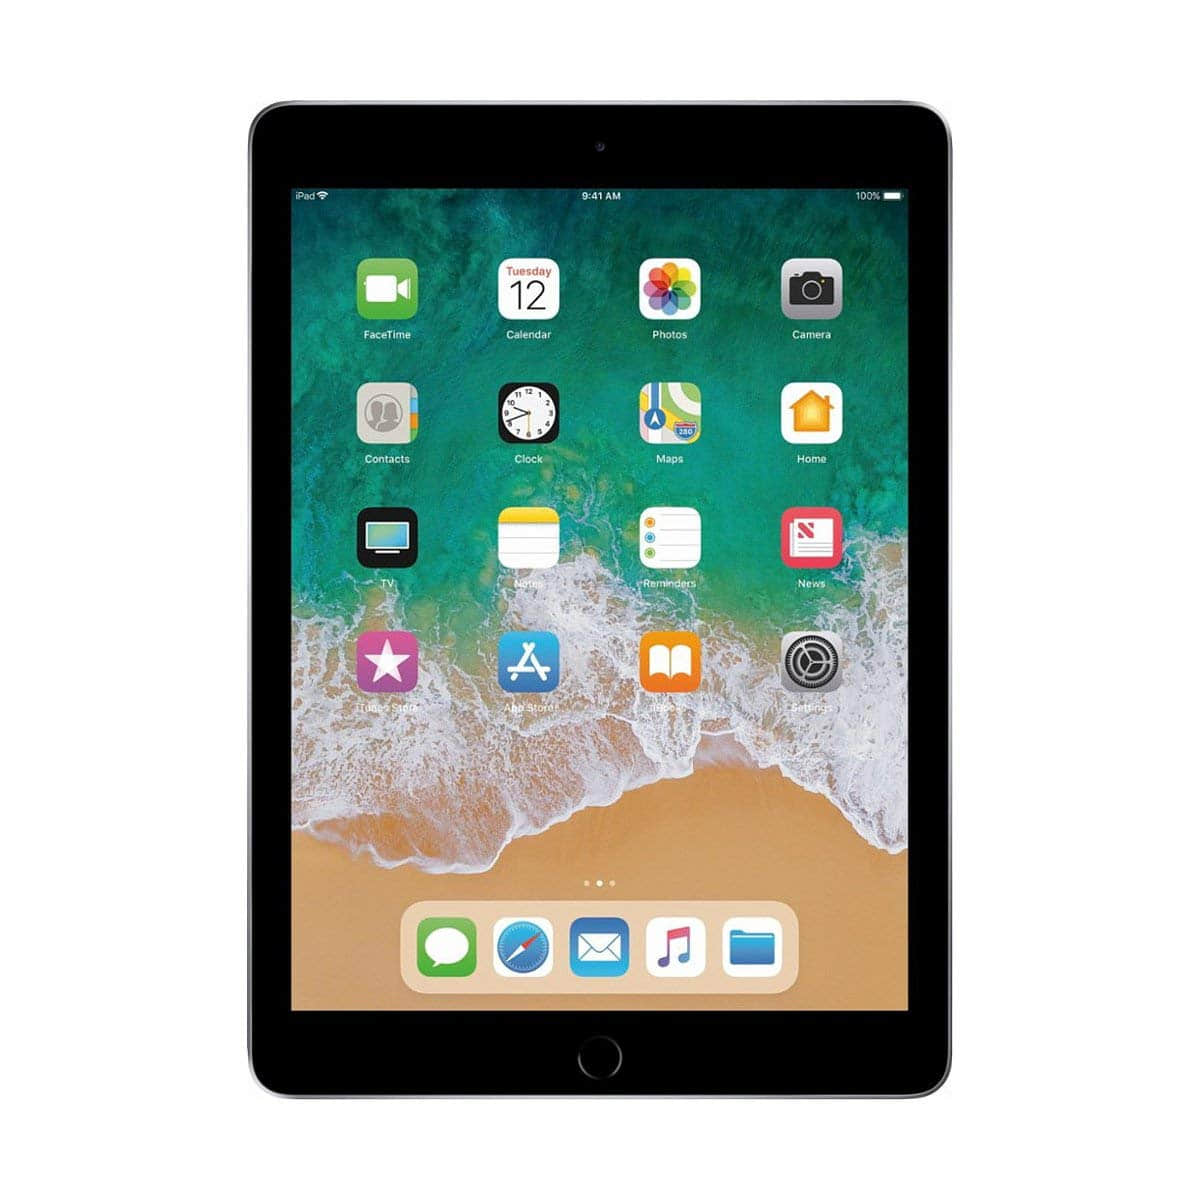 Apple iPad(2017 Model with WiFi, 32GB, Space Gray )